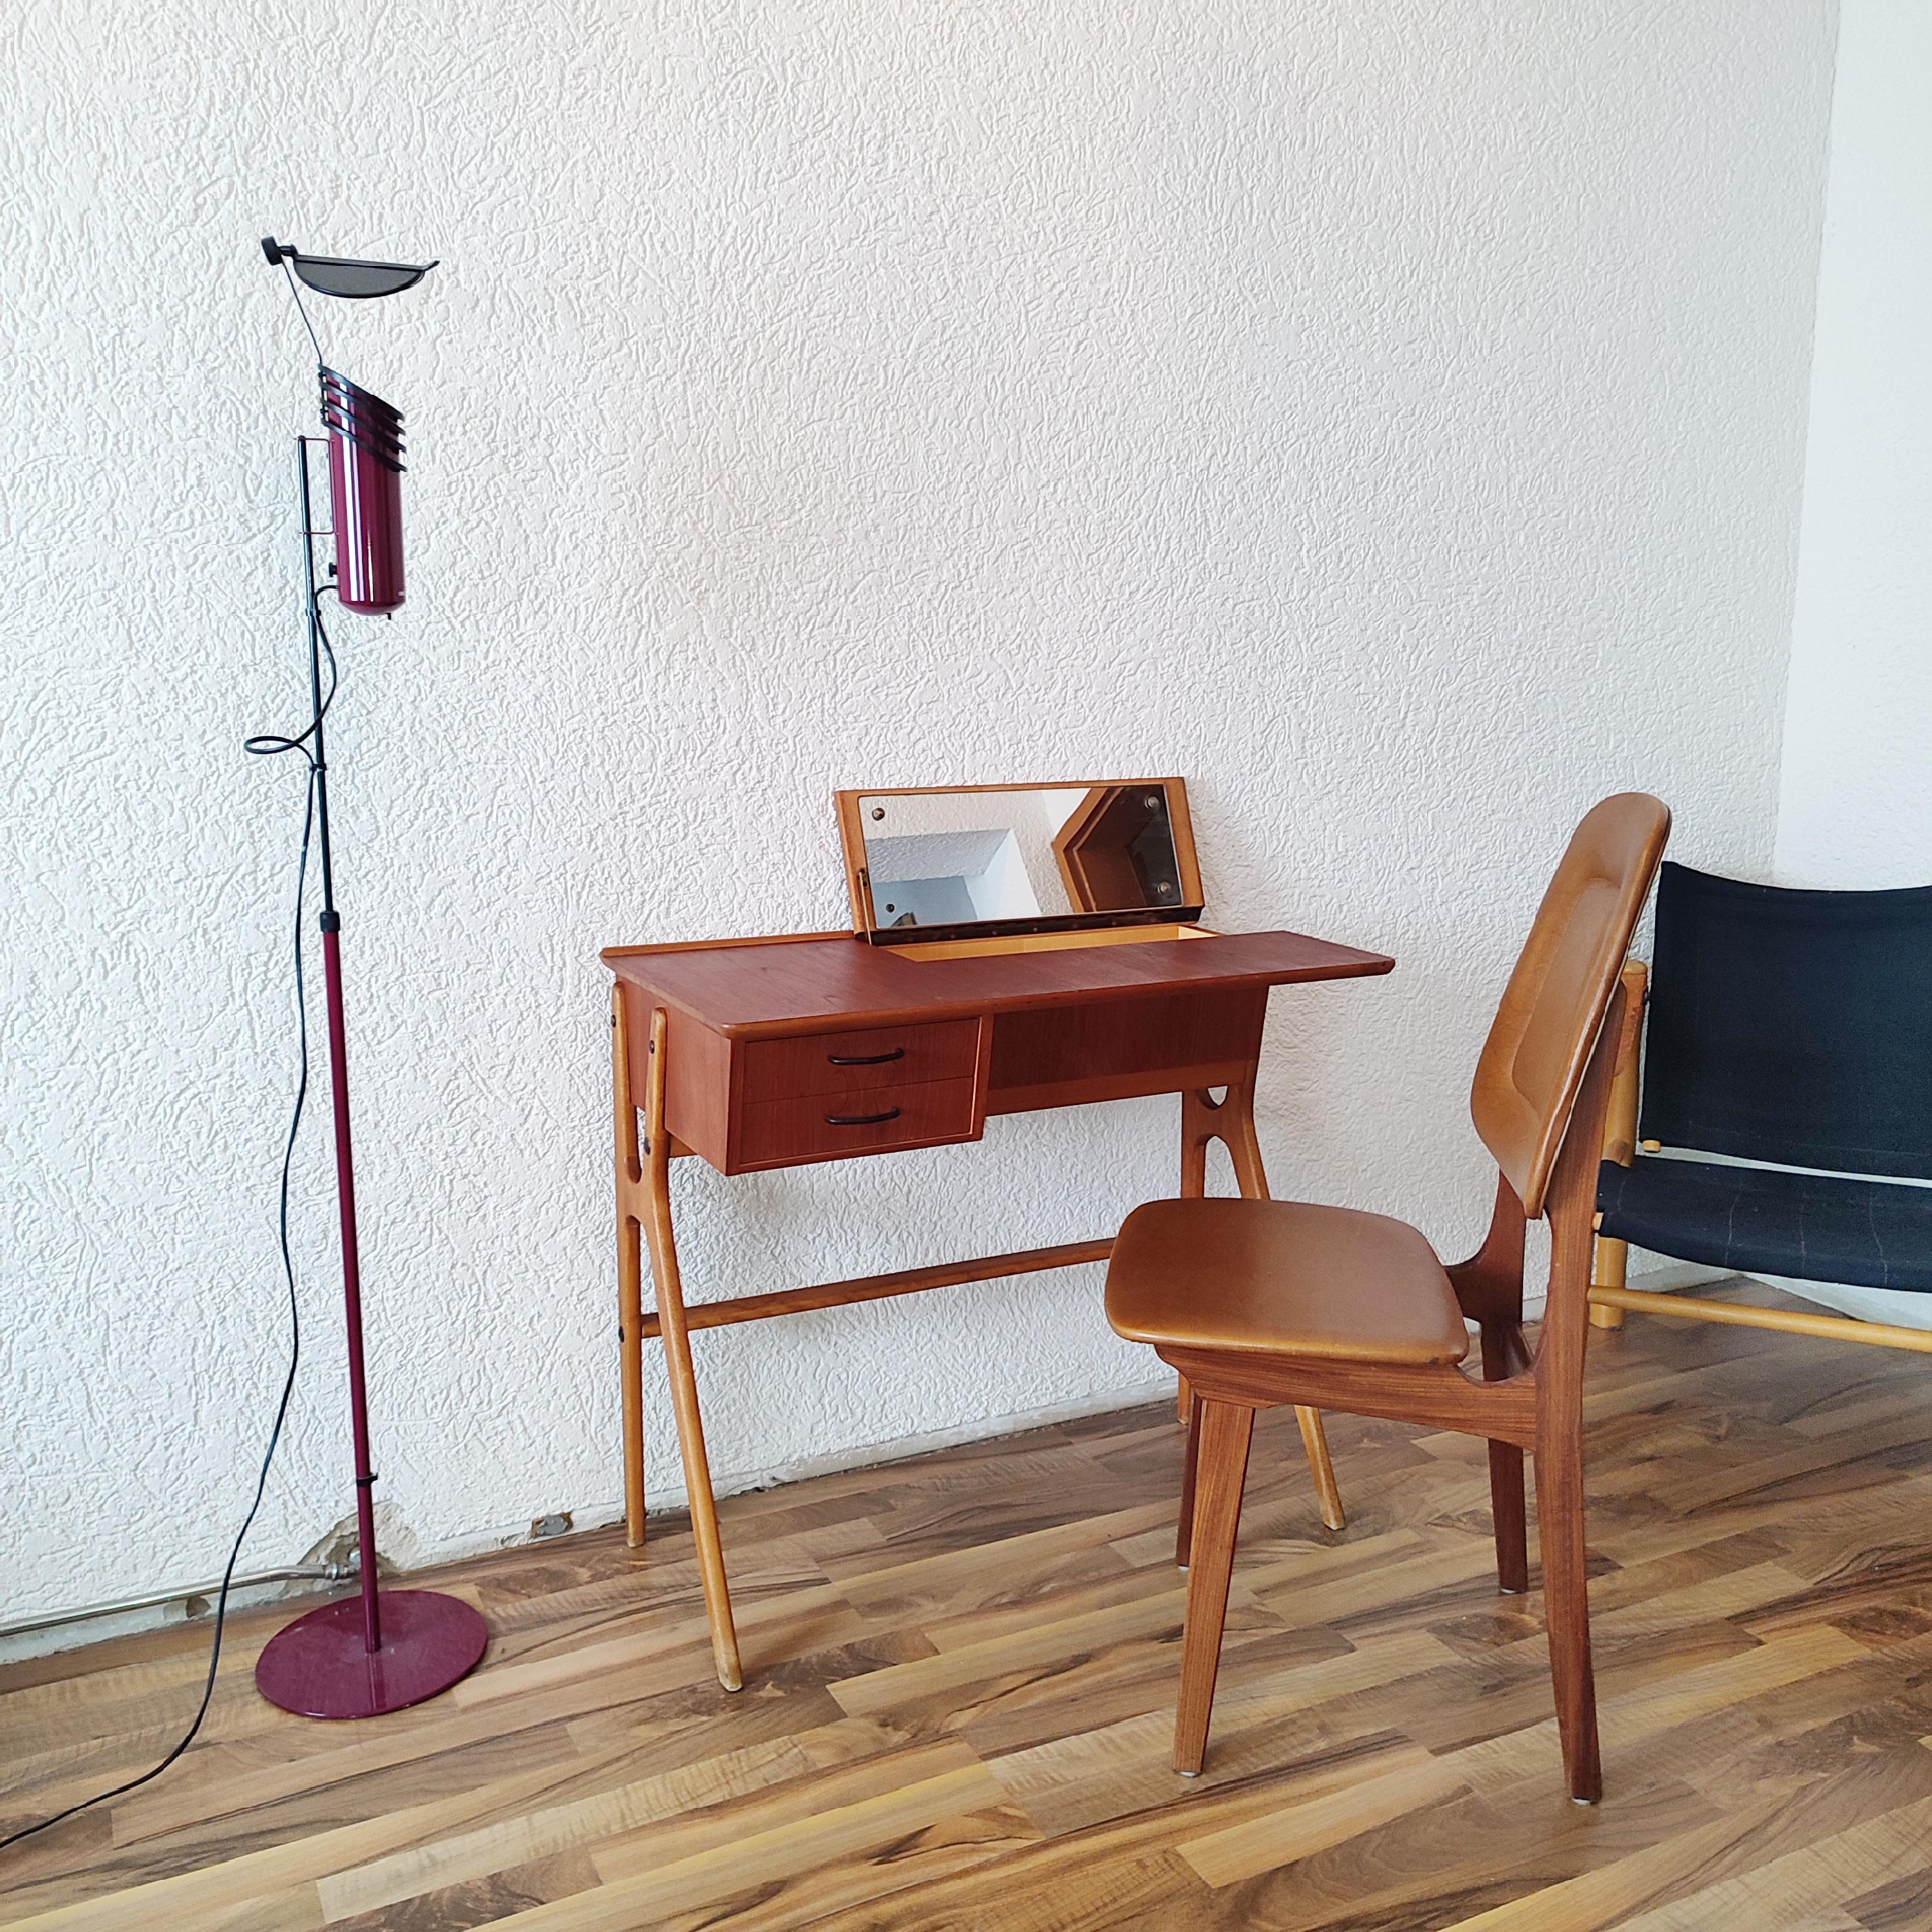 Mid-20th Century Scandinavian Lady Desk with Vanity Mirror and Chair by Sörheim Bruk, Norway